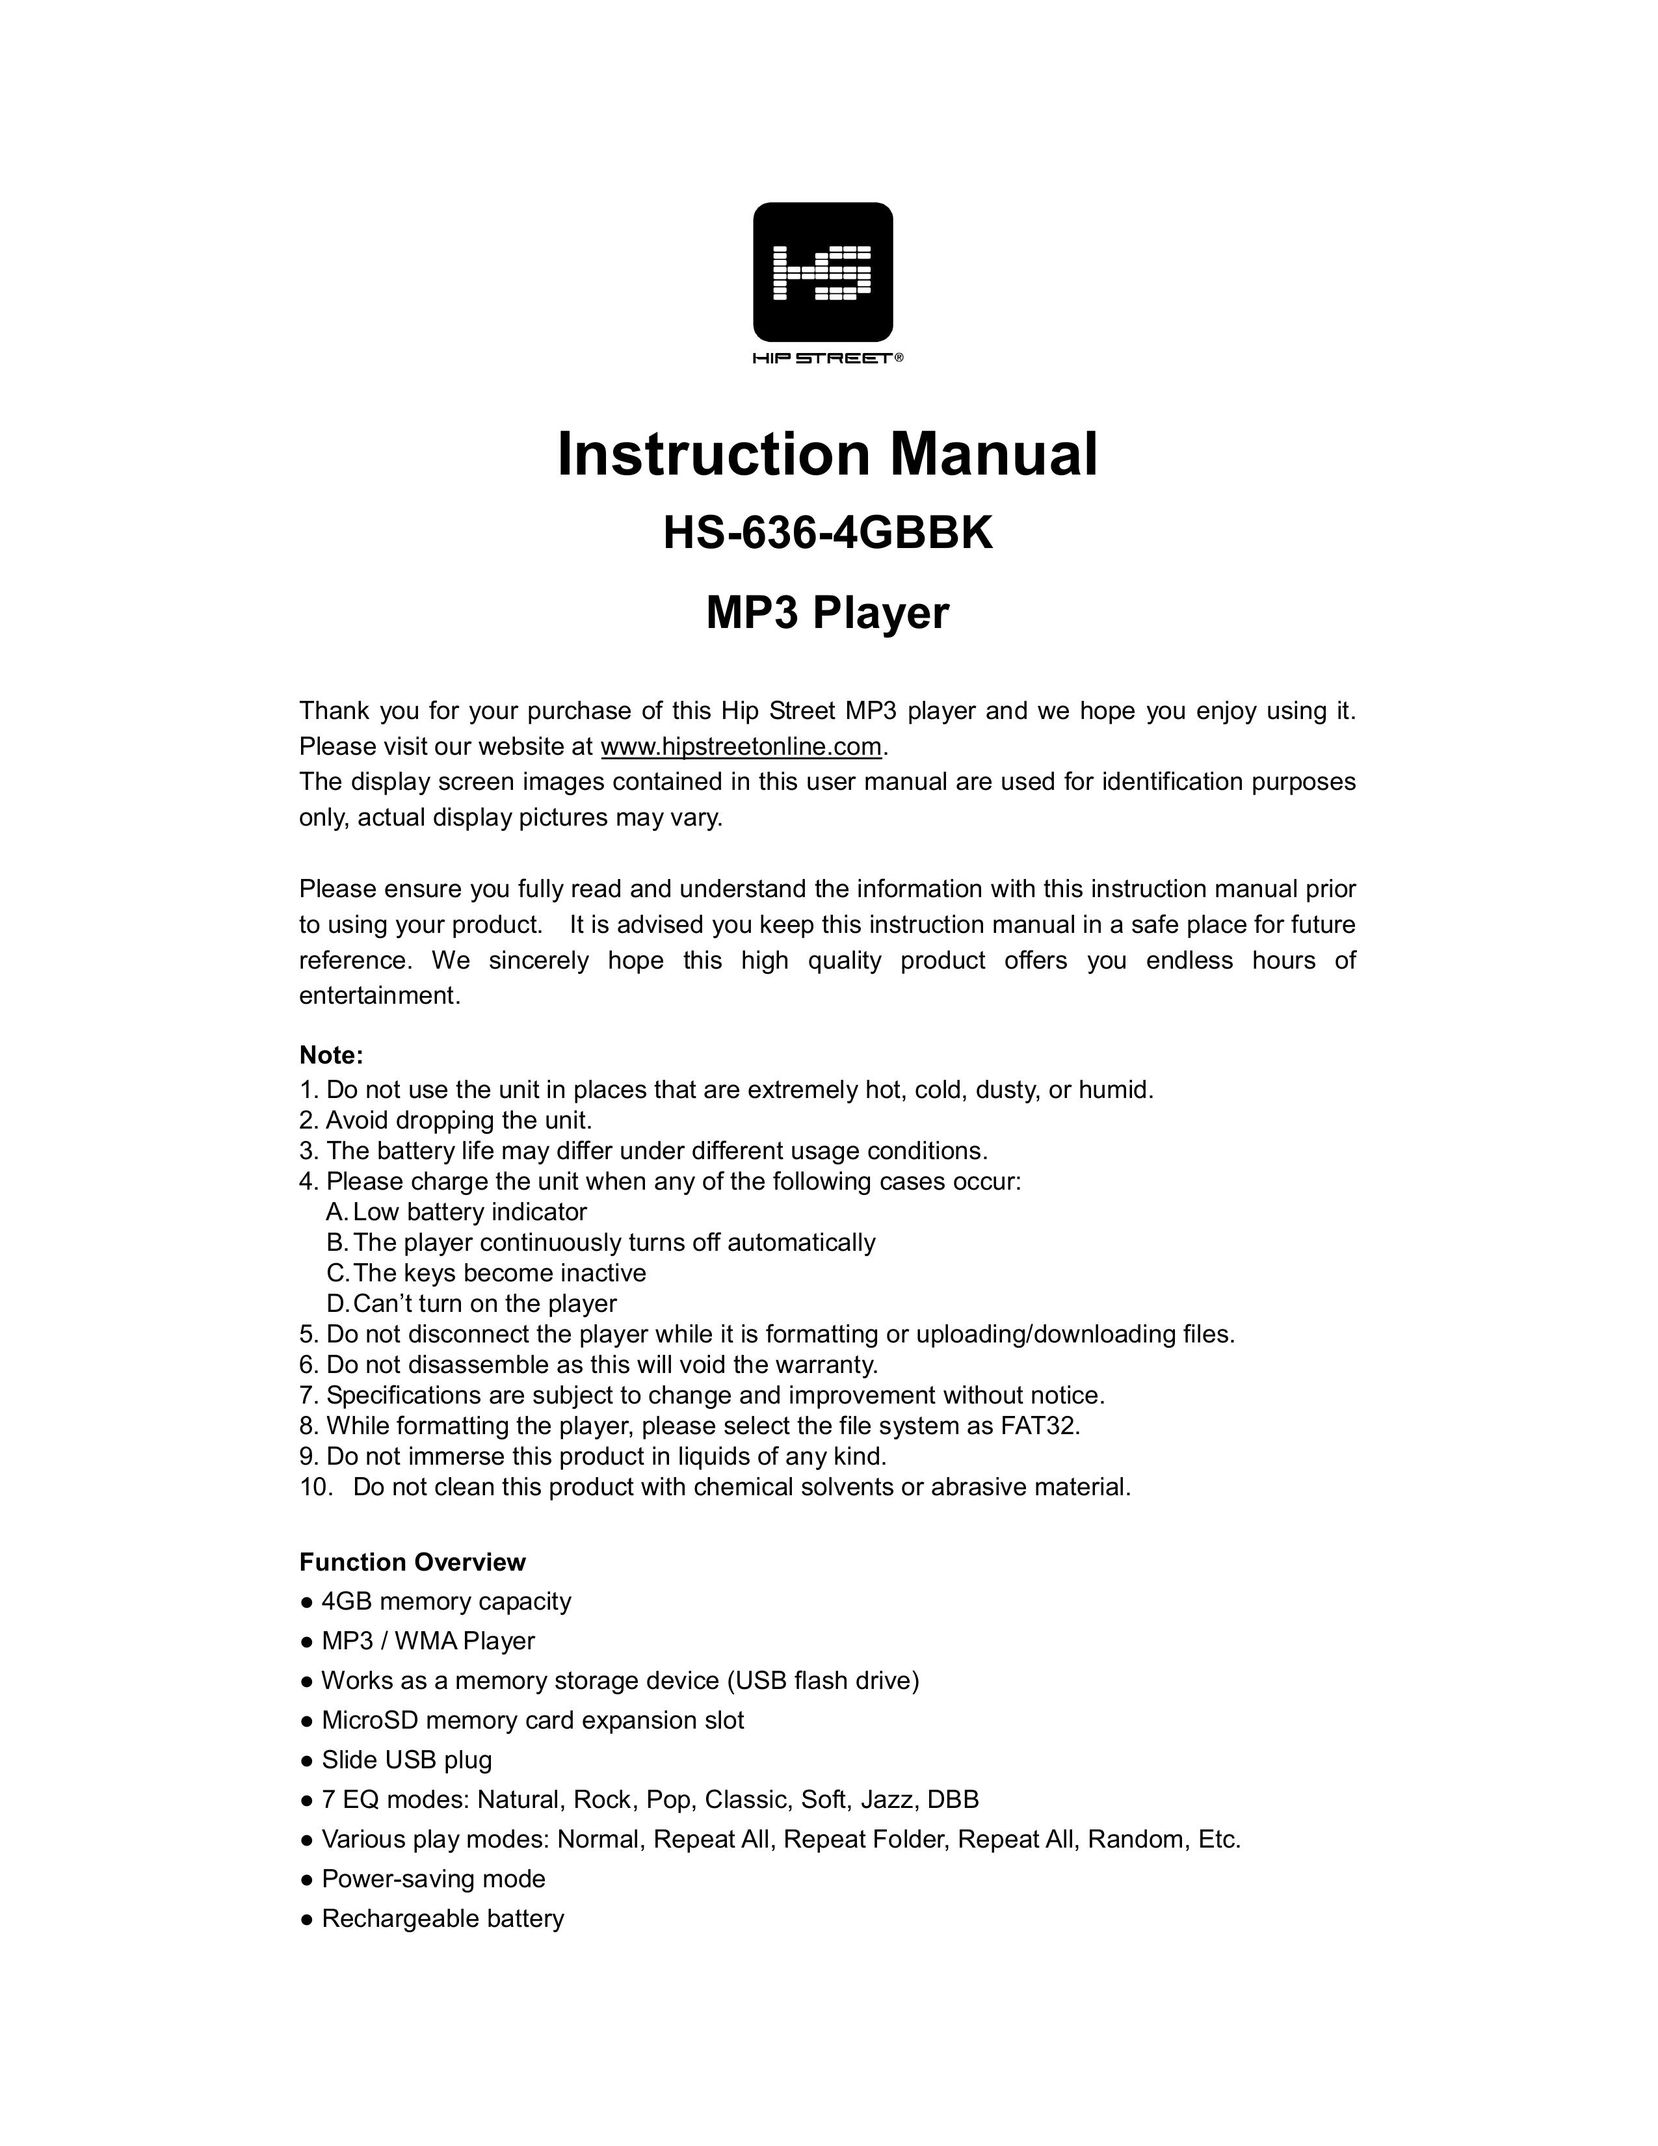 Hip Street HS-636-4GBBK MP3 Player User Manual